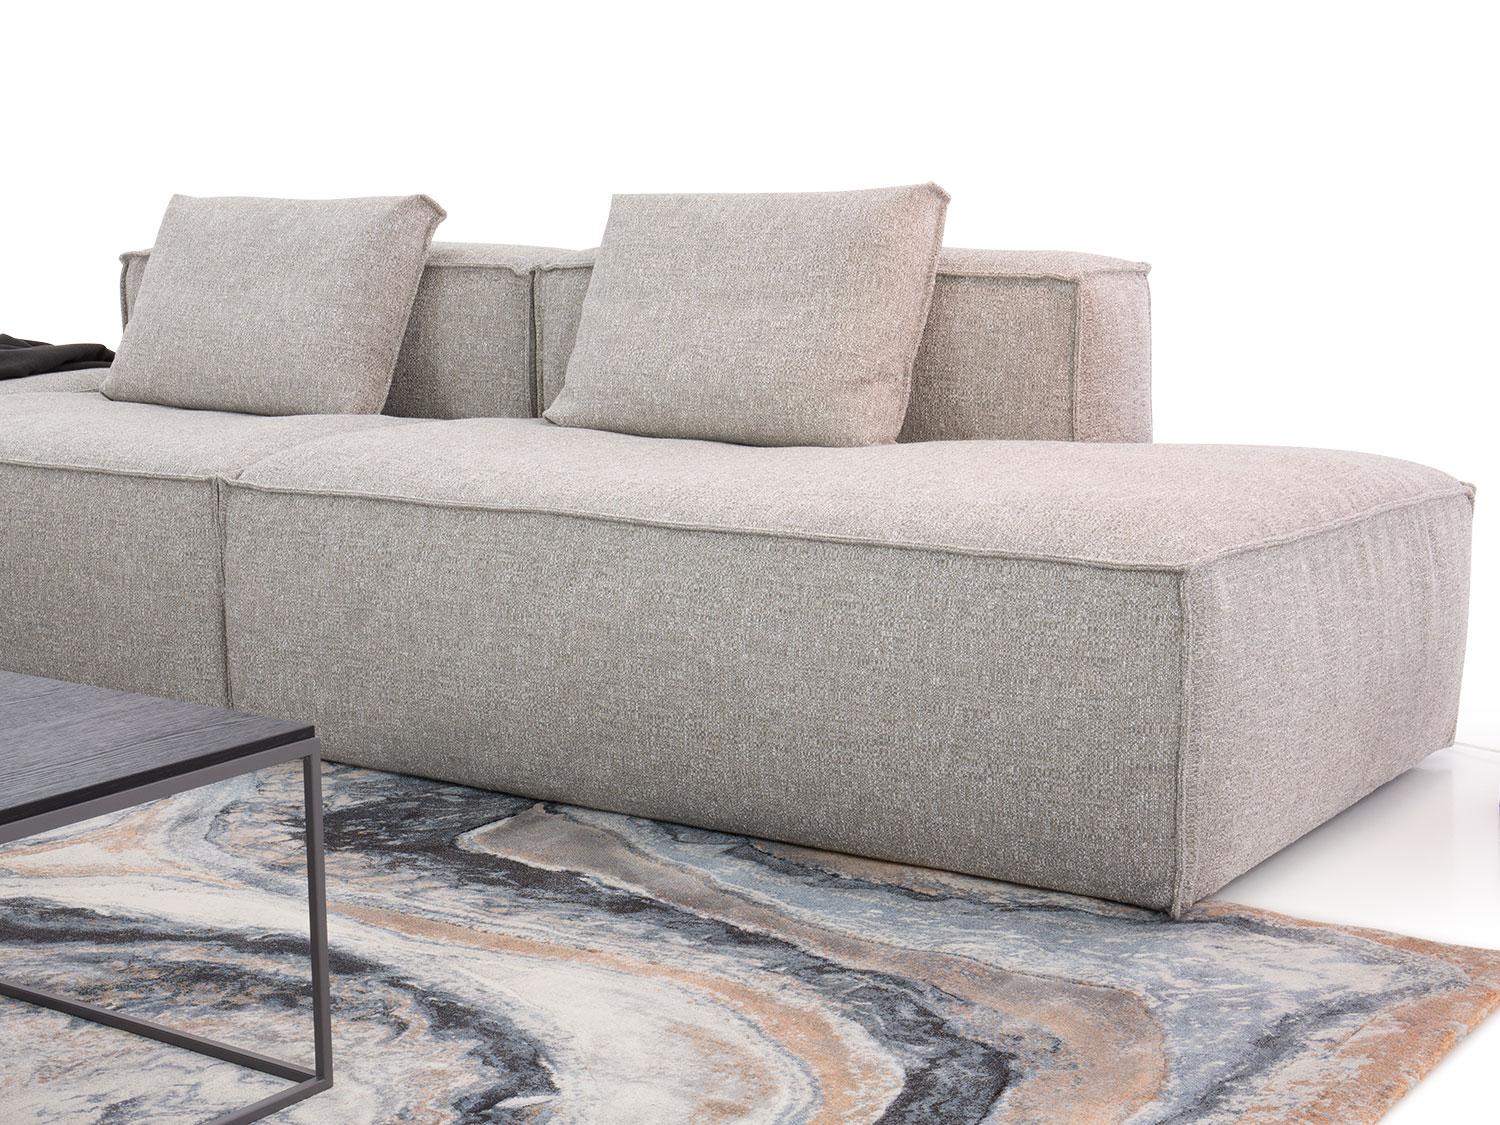 Square Modular Sofa With Big Armrests